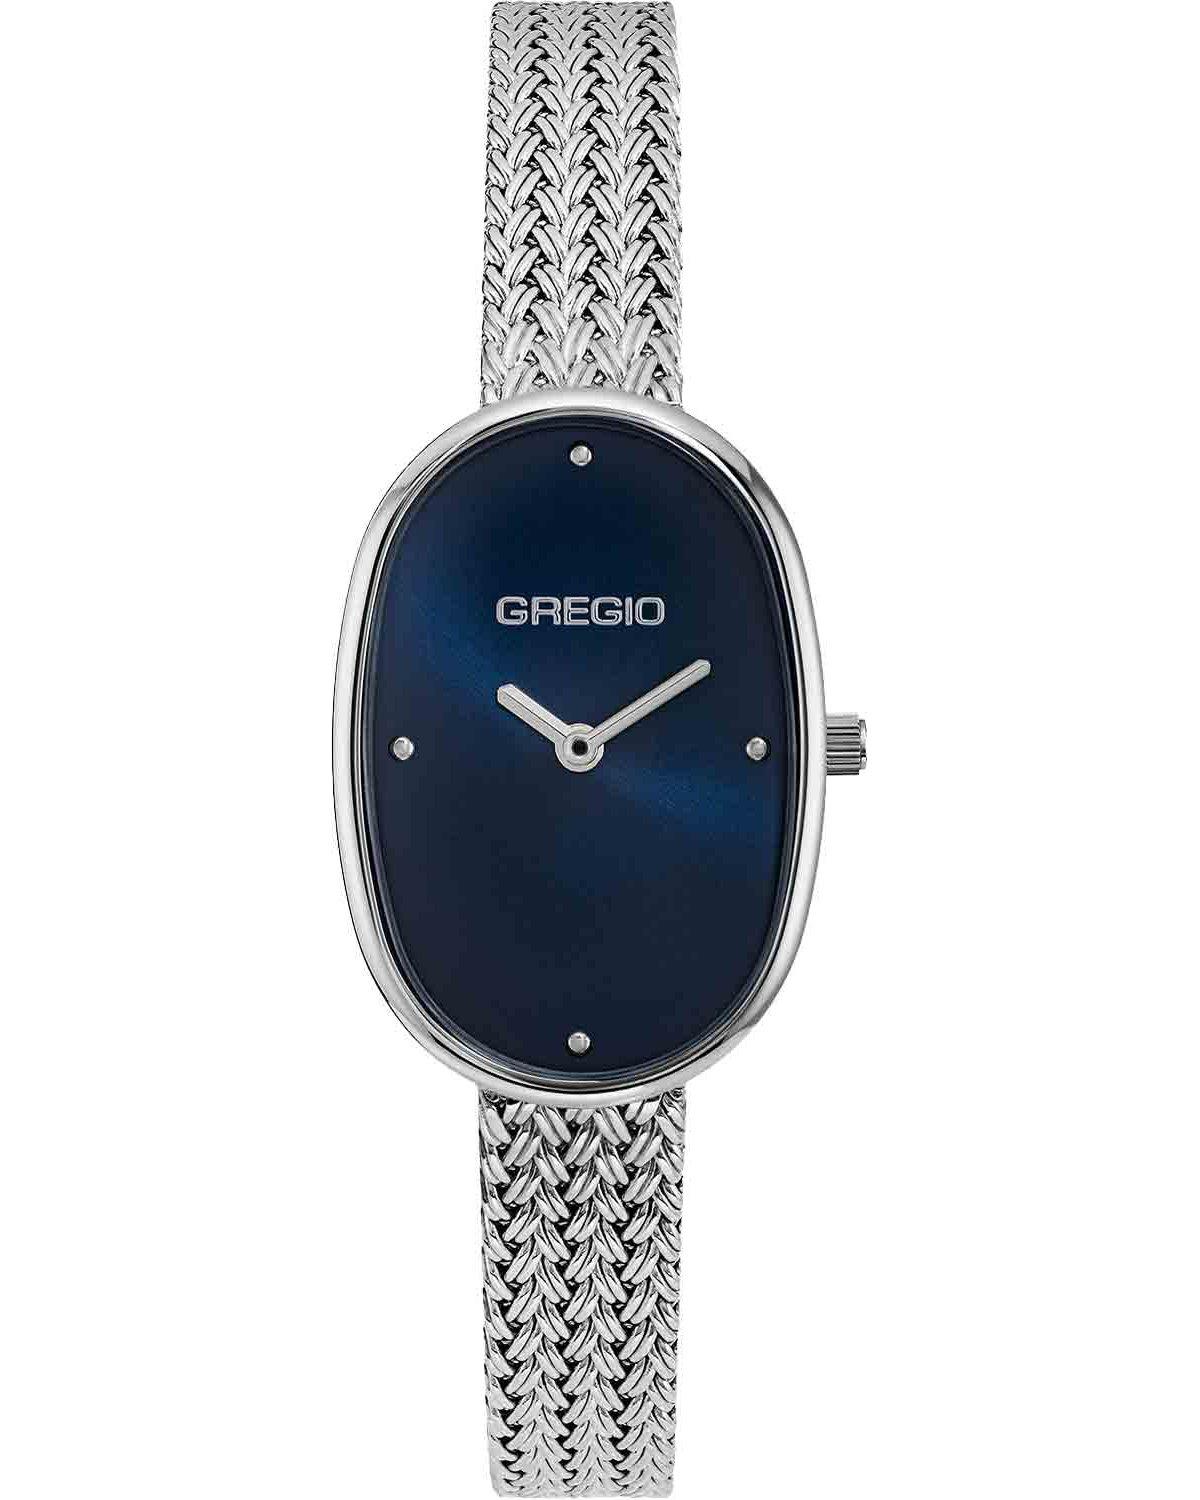 GREGIO Aveline - GR380011, Silver case with Stainless Steel Bracelet